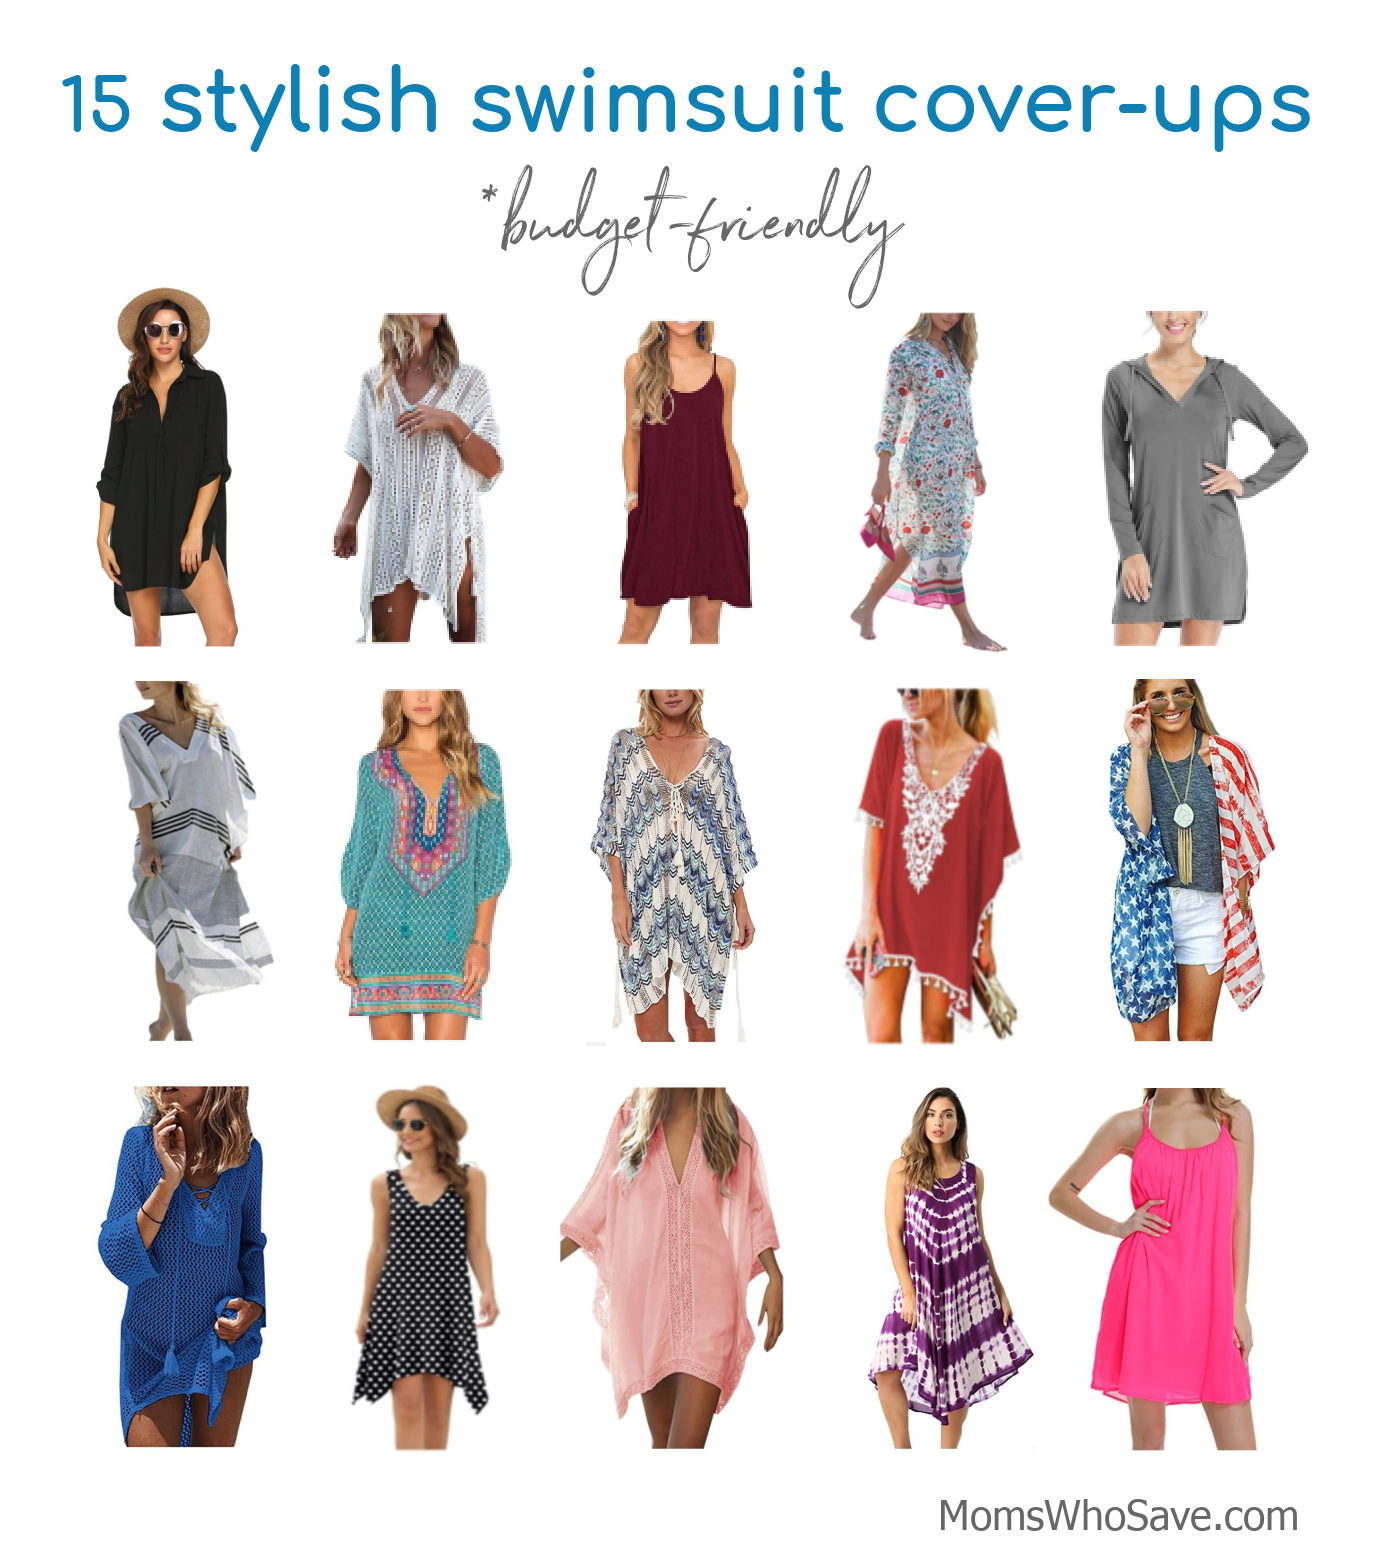 15 Stylish Swimsuit Cover-Ups (Budget-Friendly)